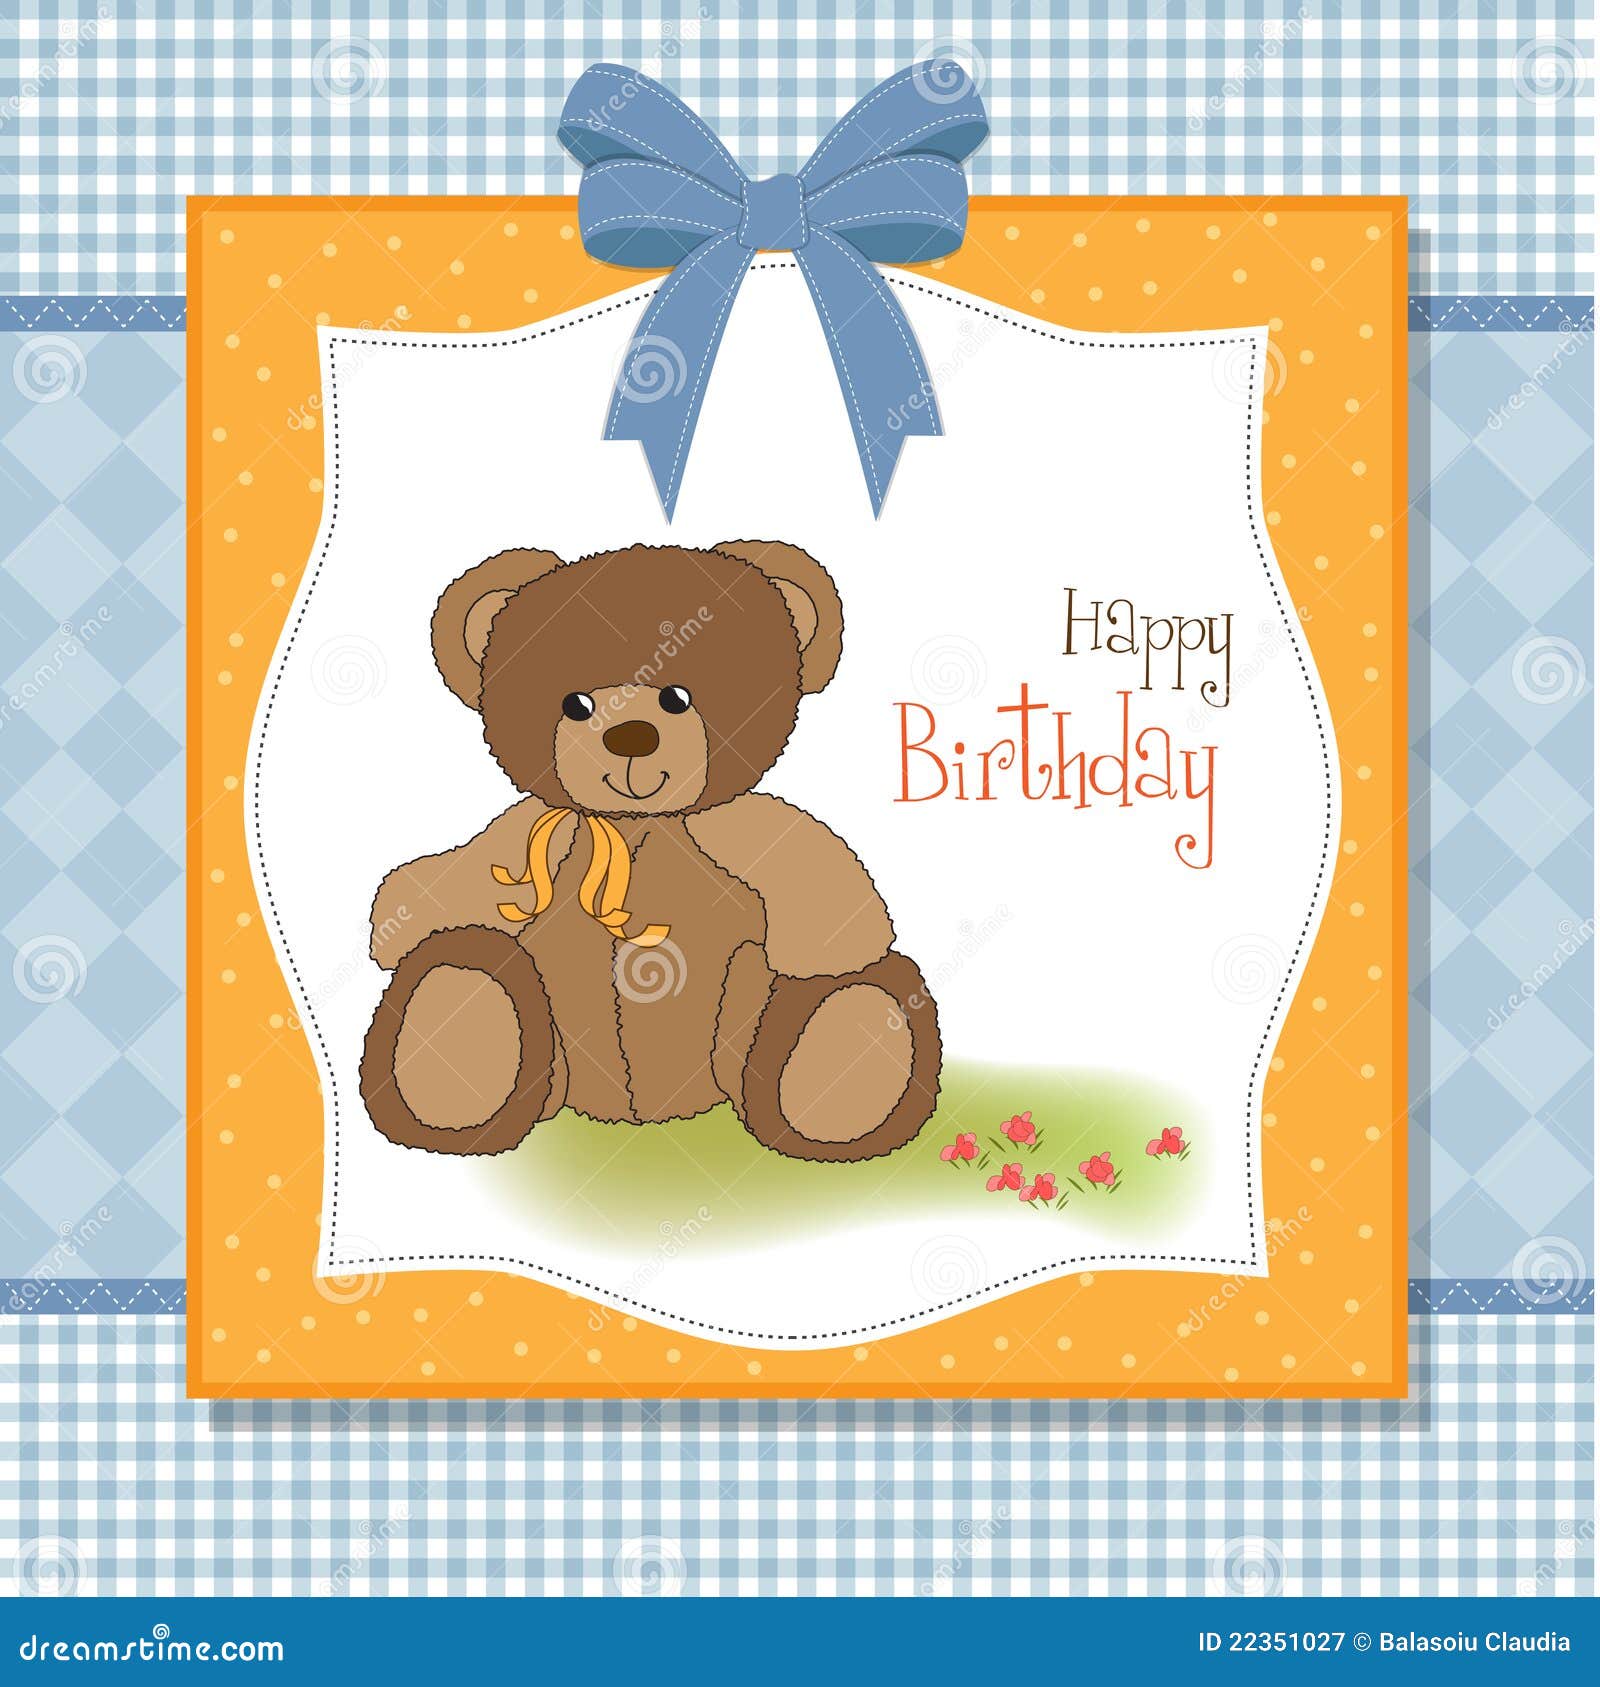 Happy birthday card stock illustration. Illustration of girl - 22351027